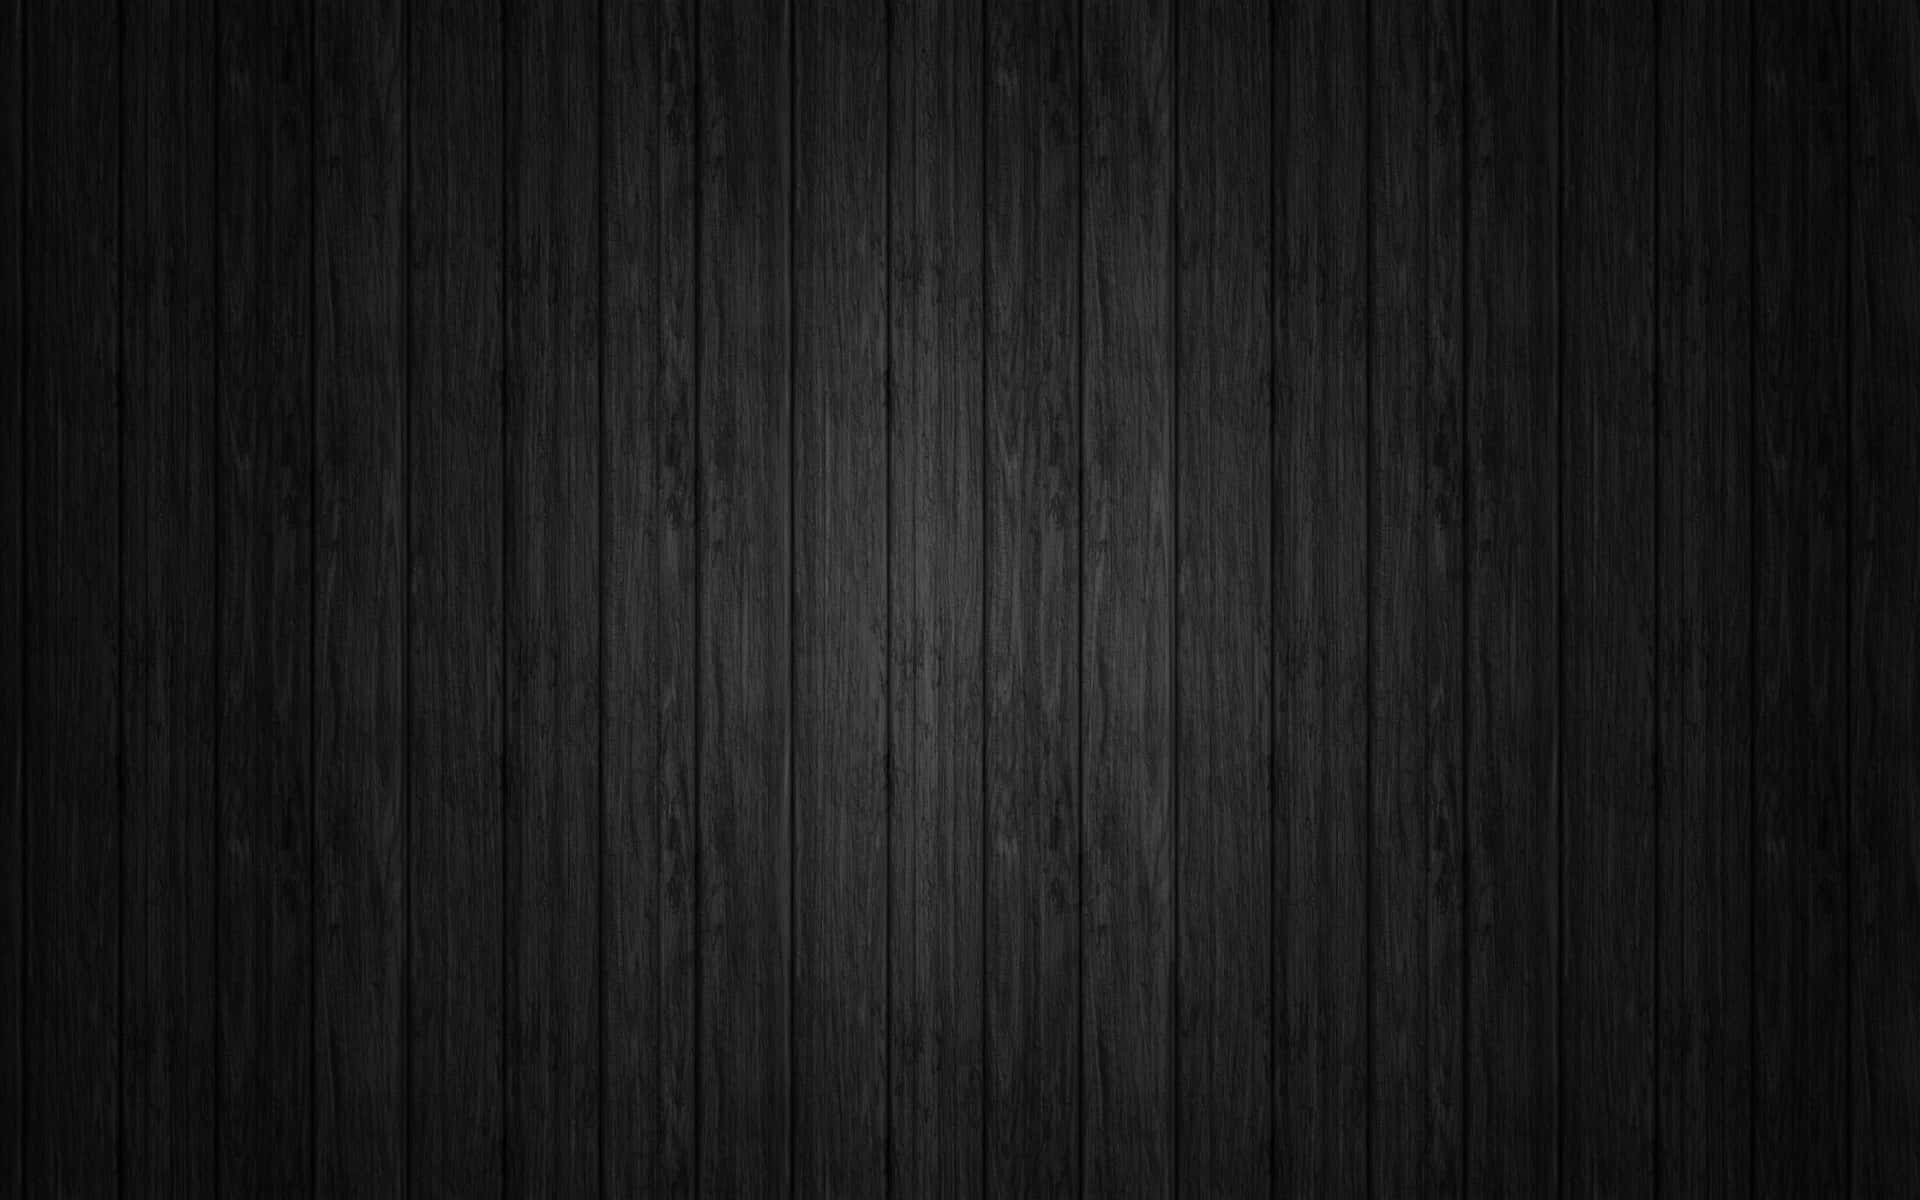 Black Wooden Panel Texture Background